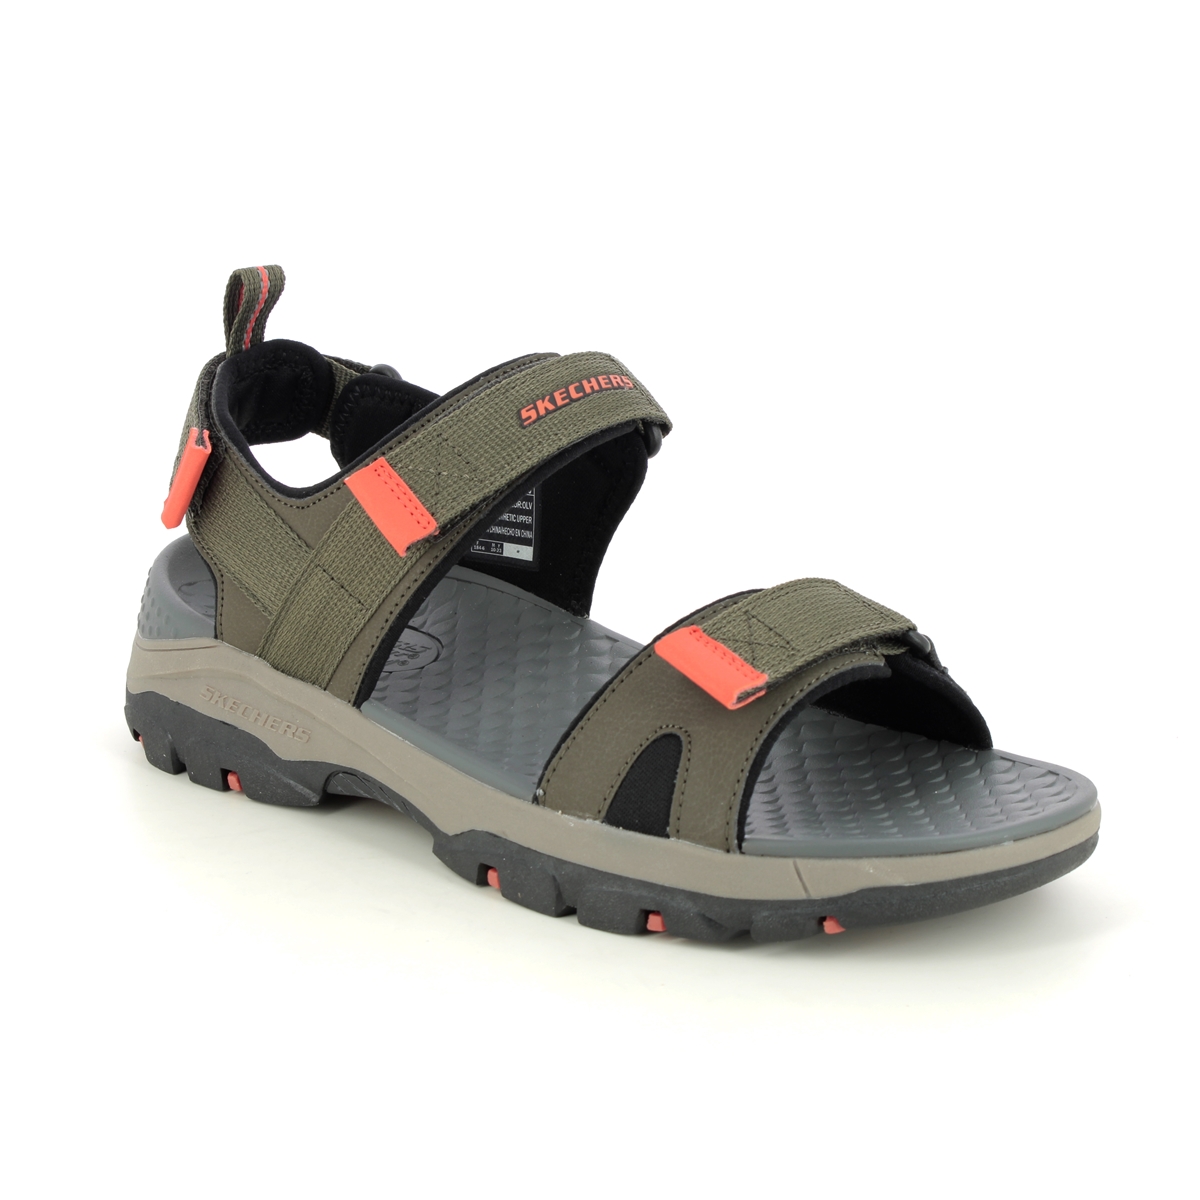 Skechers Tresmen OLV Olive Green Mens sandals 205112 in a Plain Textile in Size 8